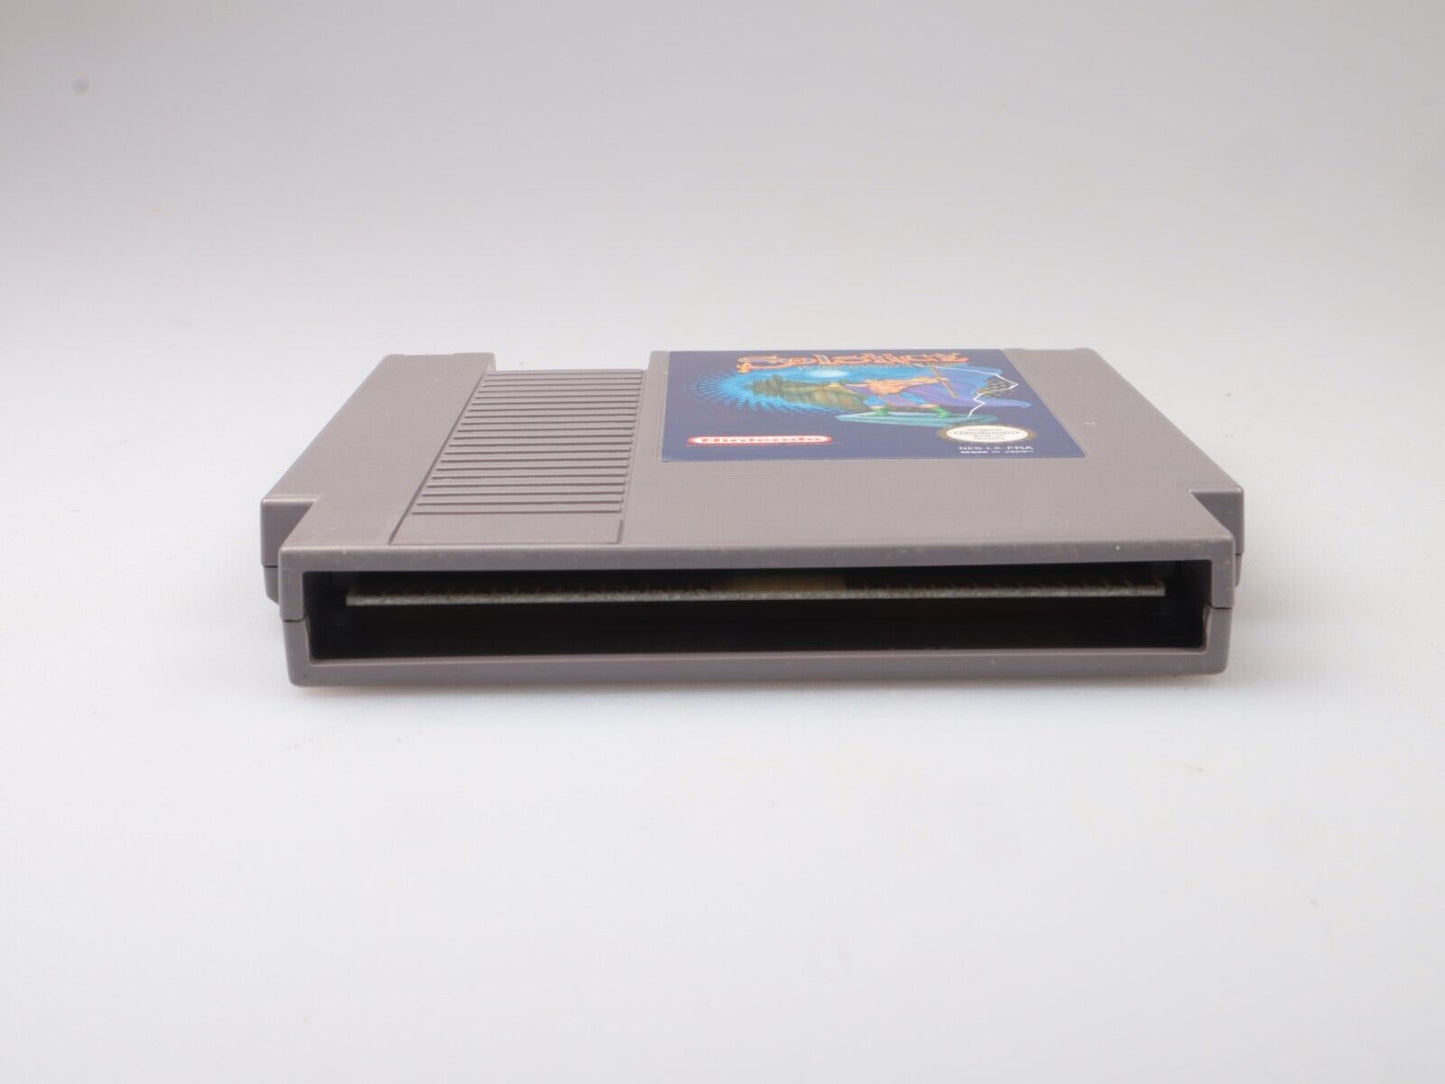 NES | Zonnewende | FAH| Nintendo NES-cartridge 